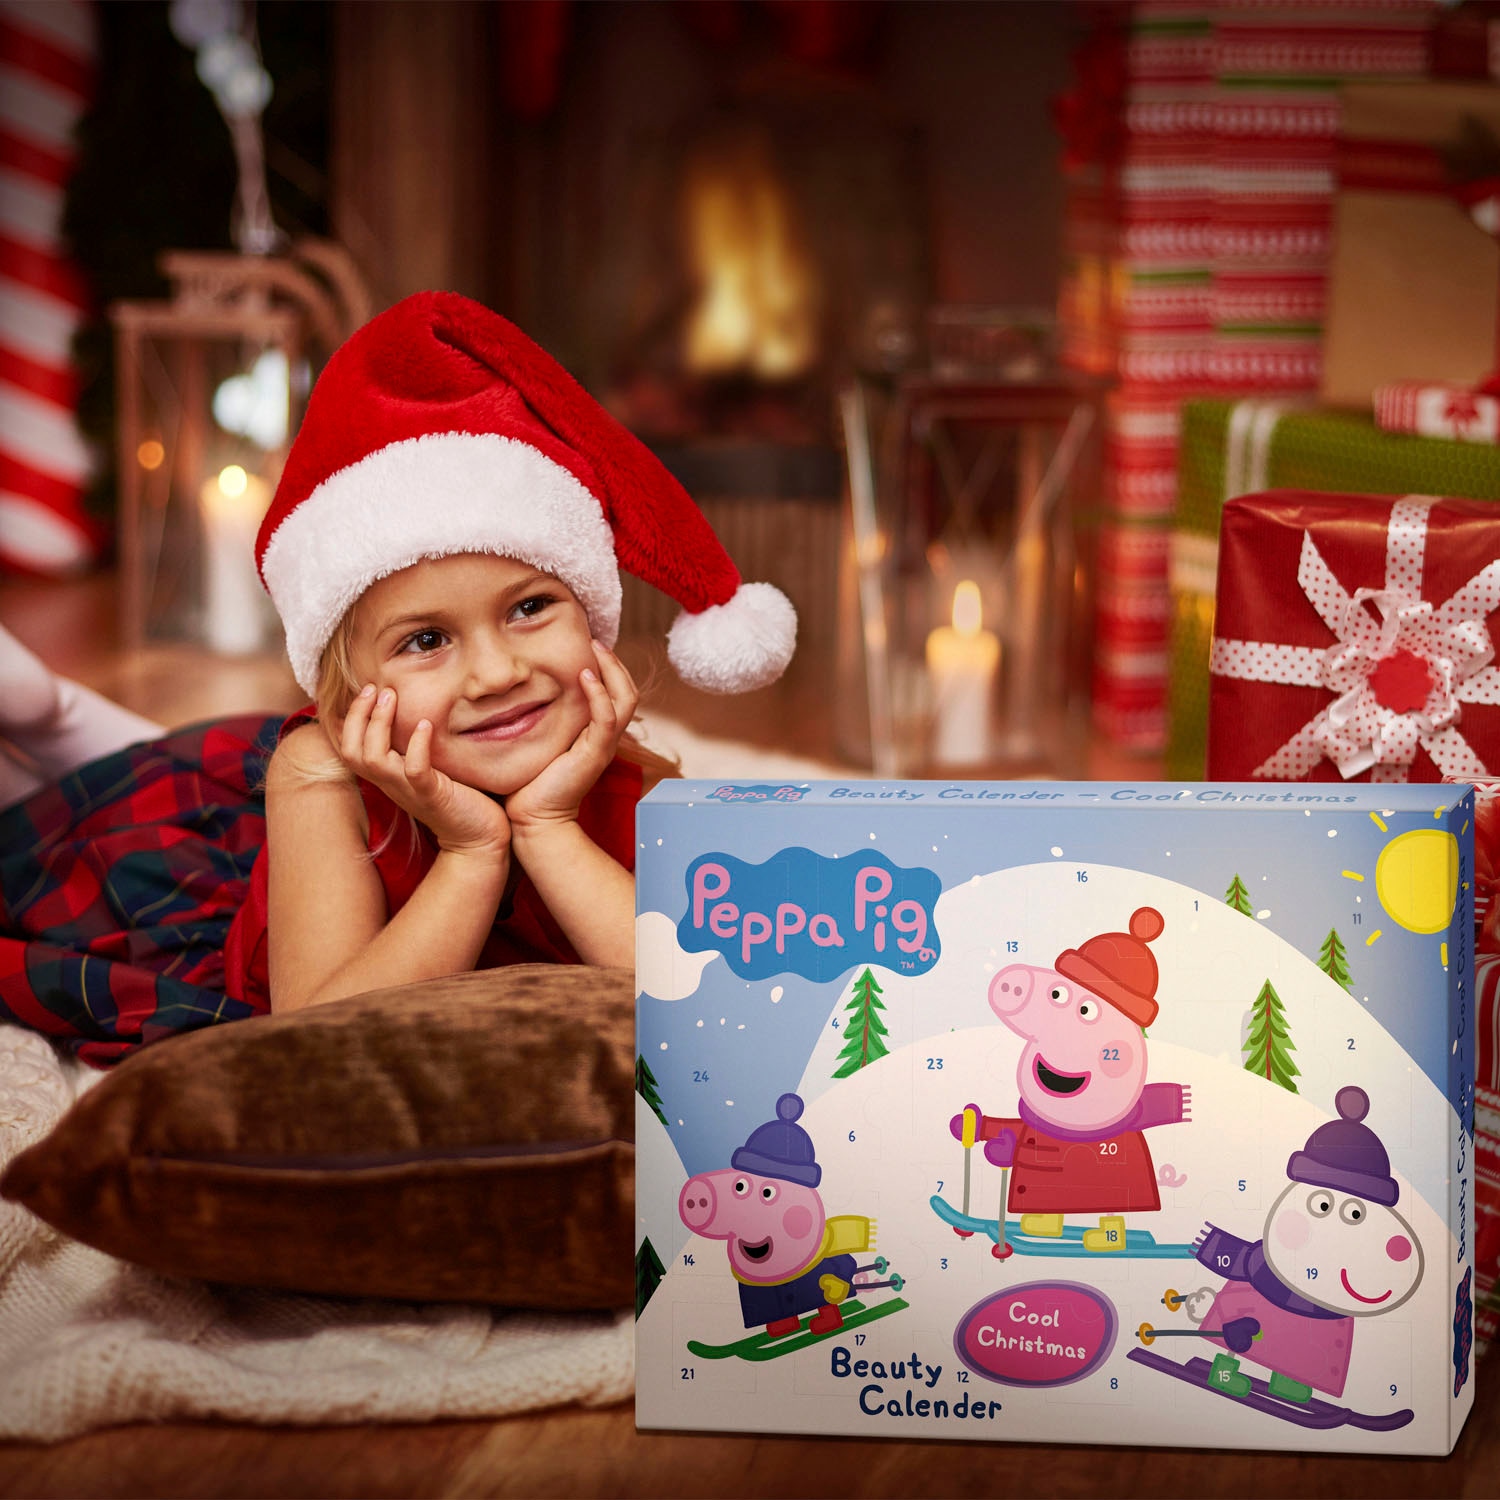 Peppa Pig Adventskalender »Peppa Pig Bath & Fun Calendar \'Cool Christmas\'«,  ab 6 Jahren | BAUR